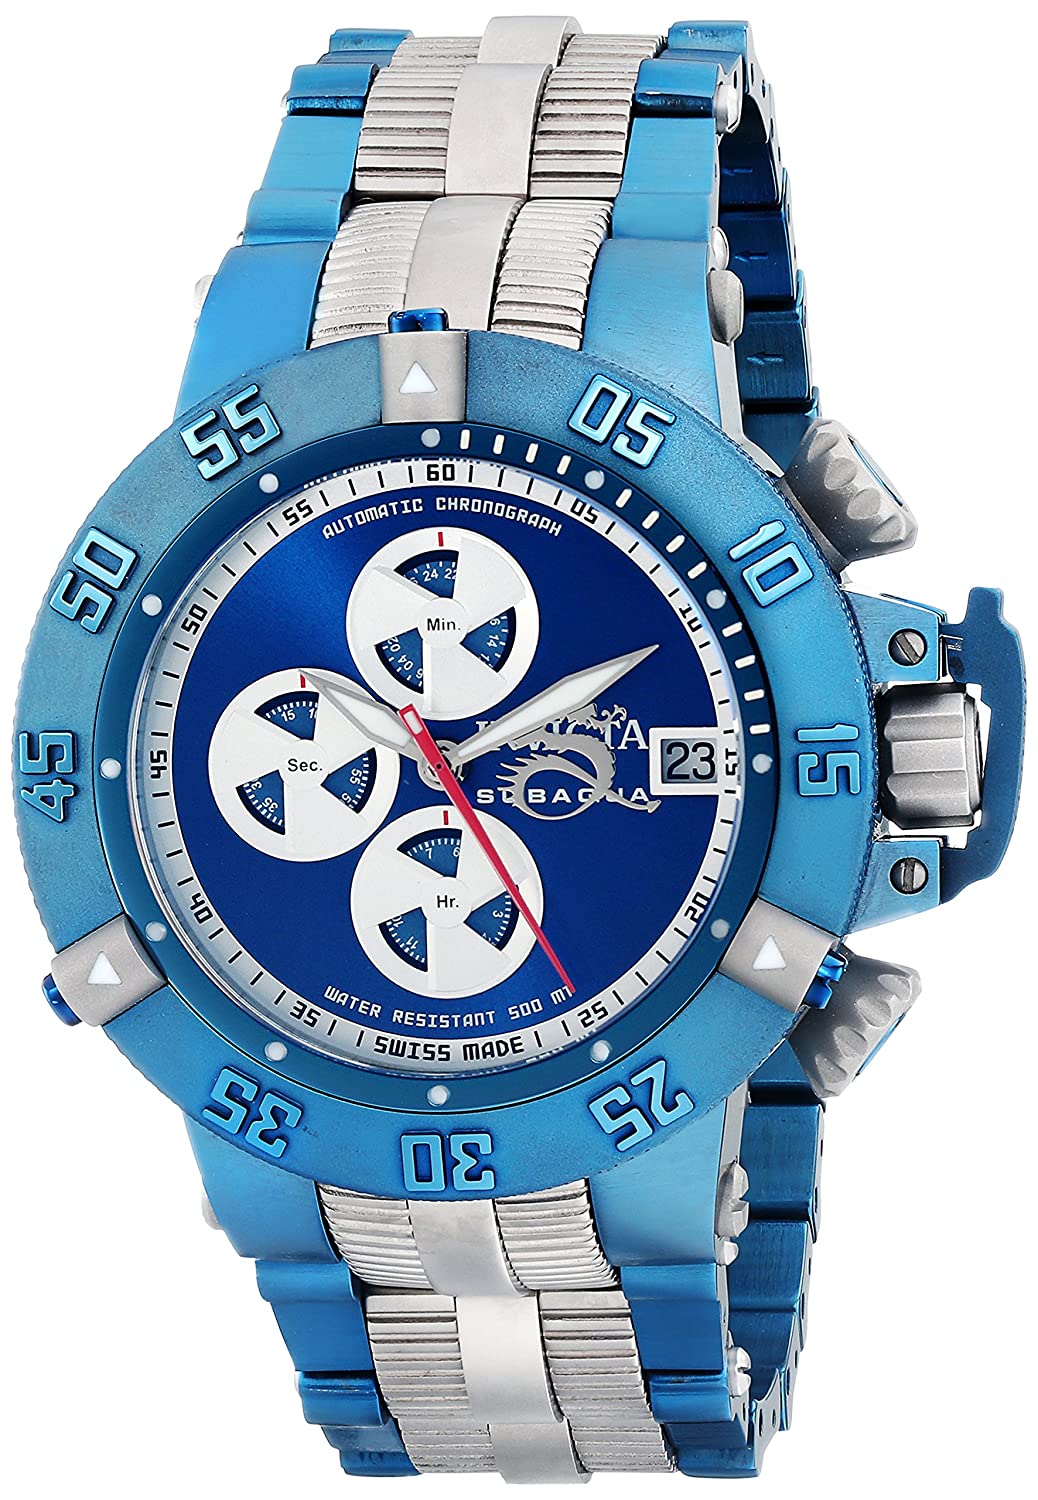 Invicta Men's 11645 Subaqua Analog Swiss-Automatic Blue Watch